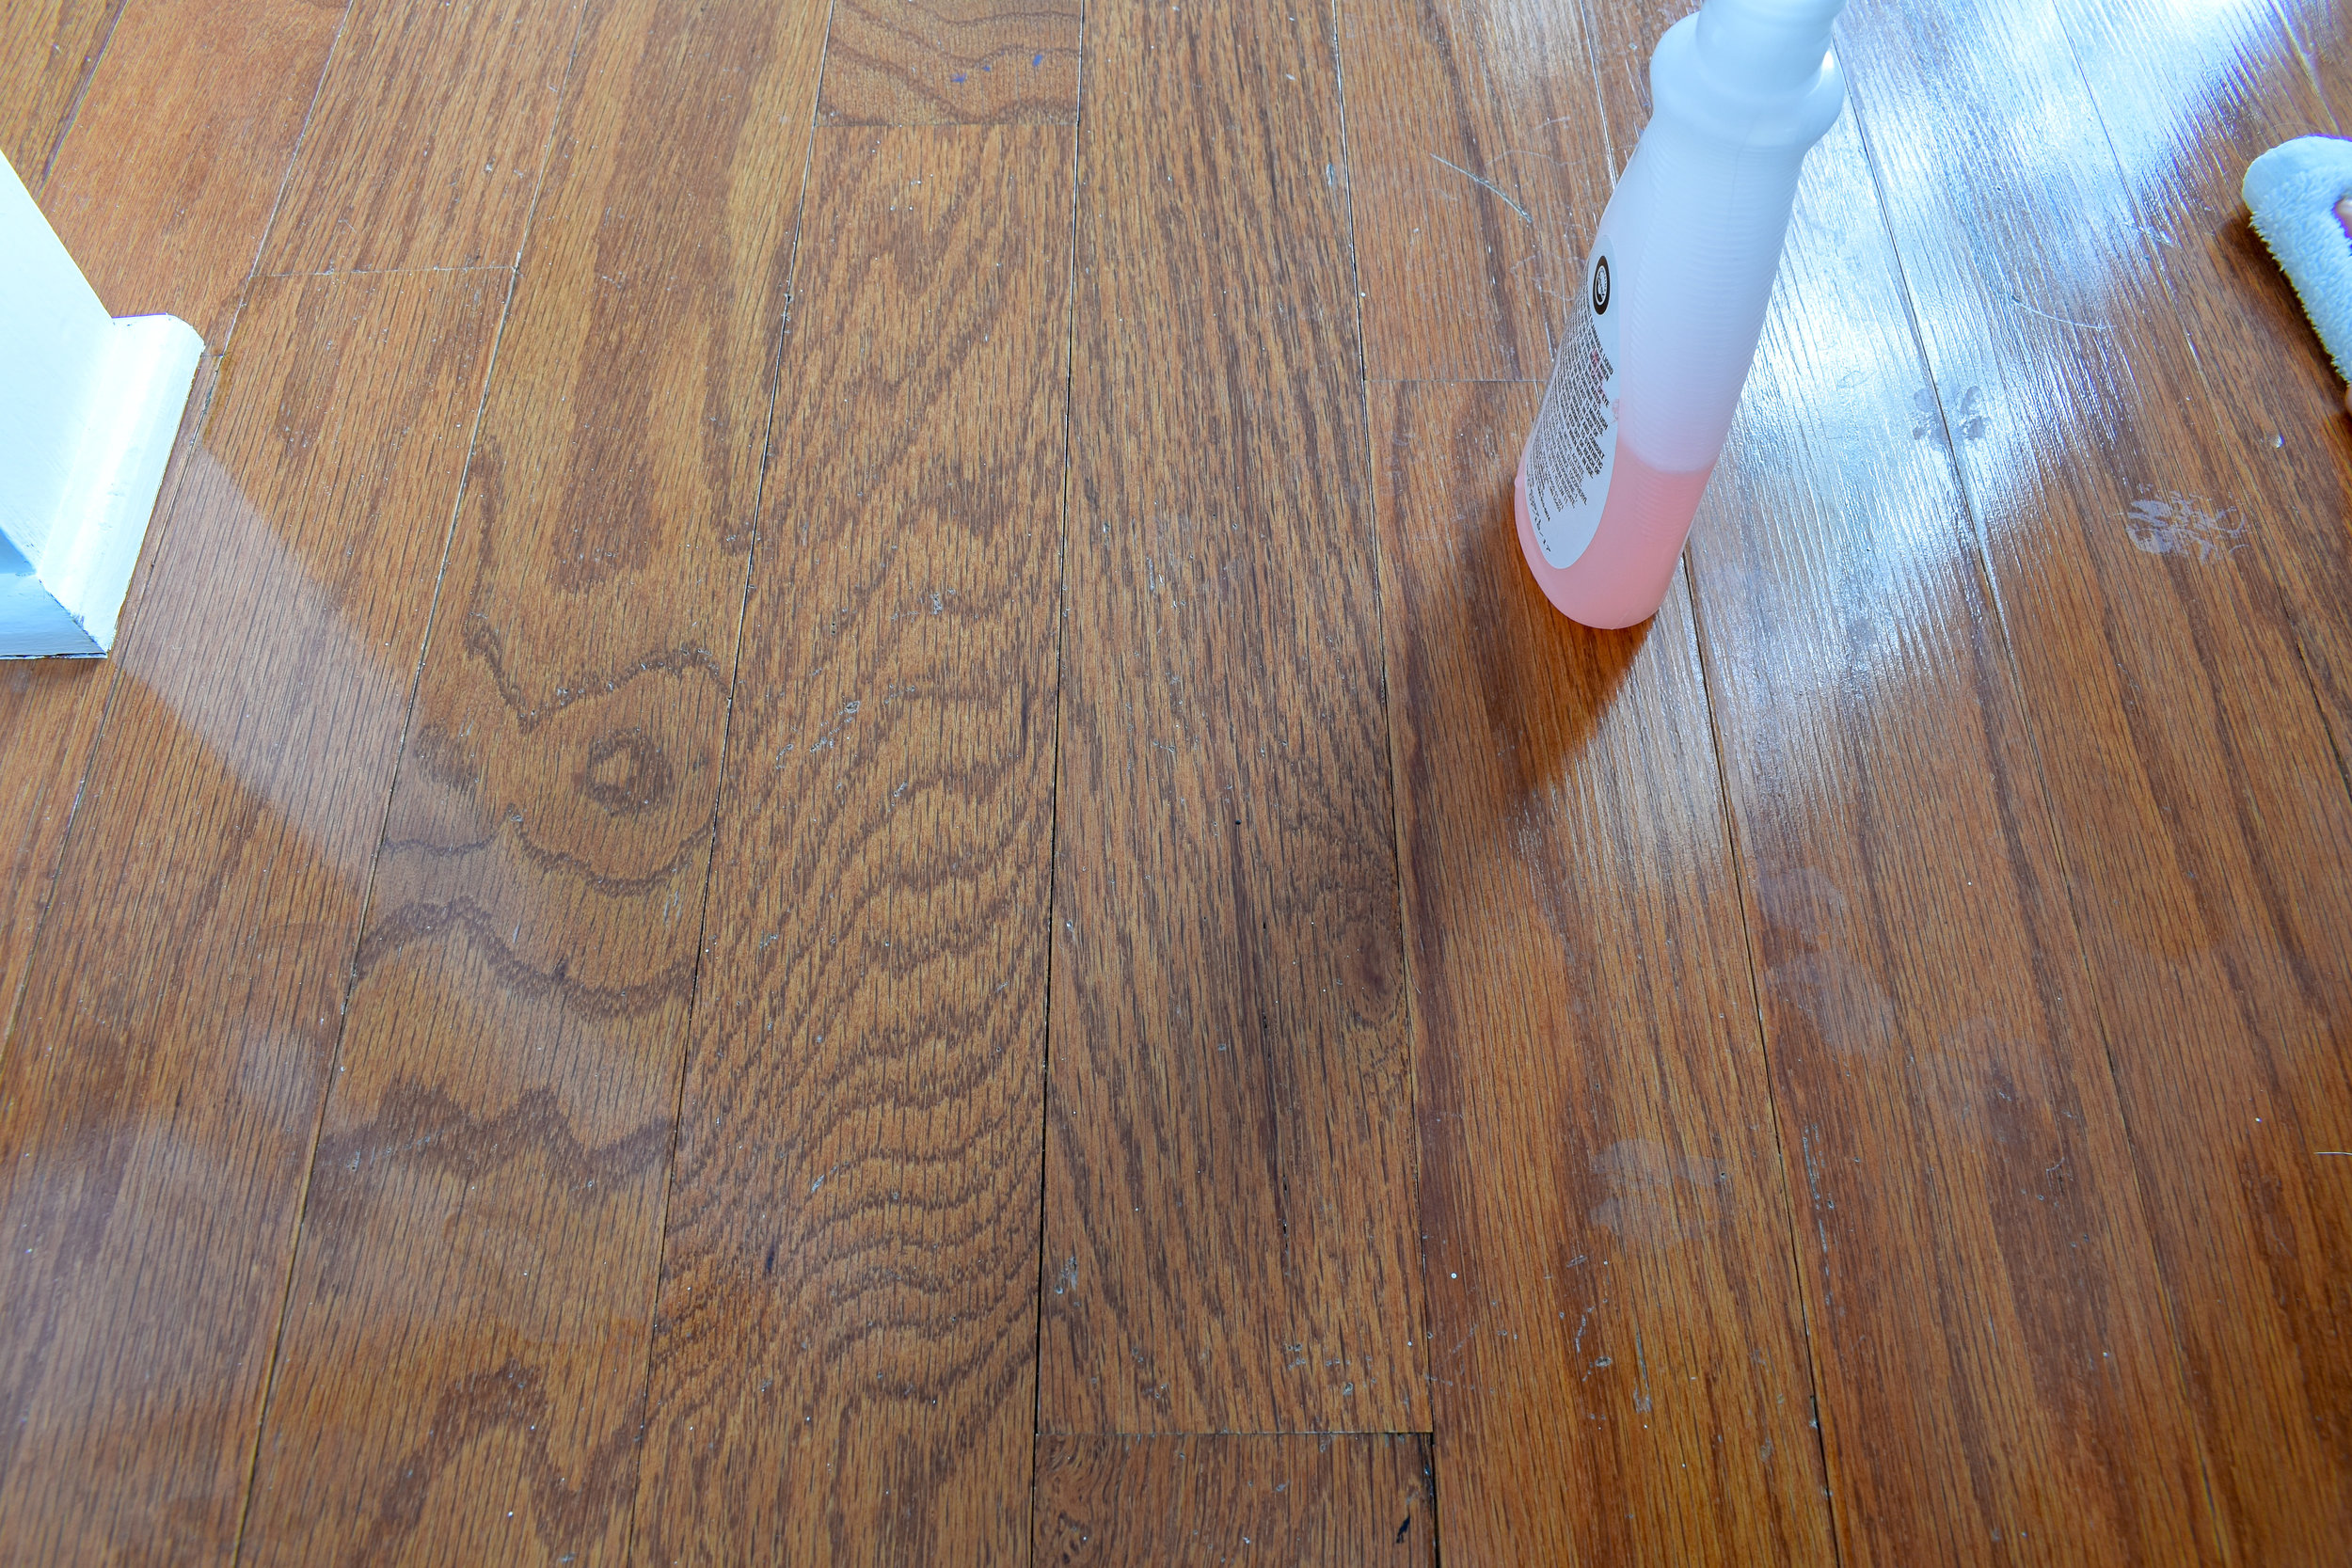 How To Make Old Hardwood Floors Shine, How To Get Hardwood Floors To Shine